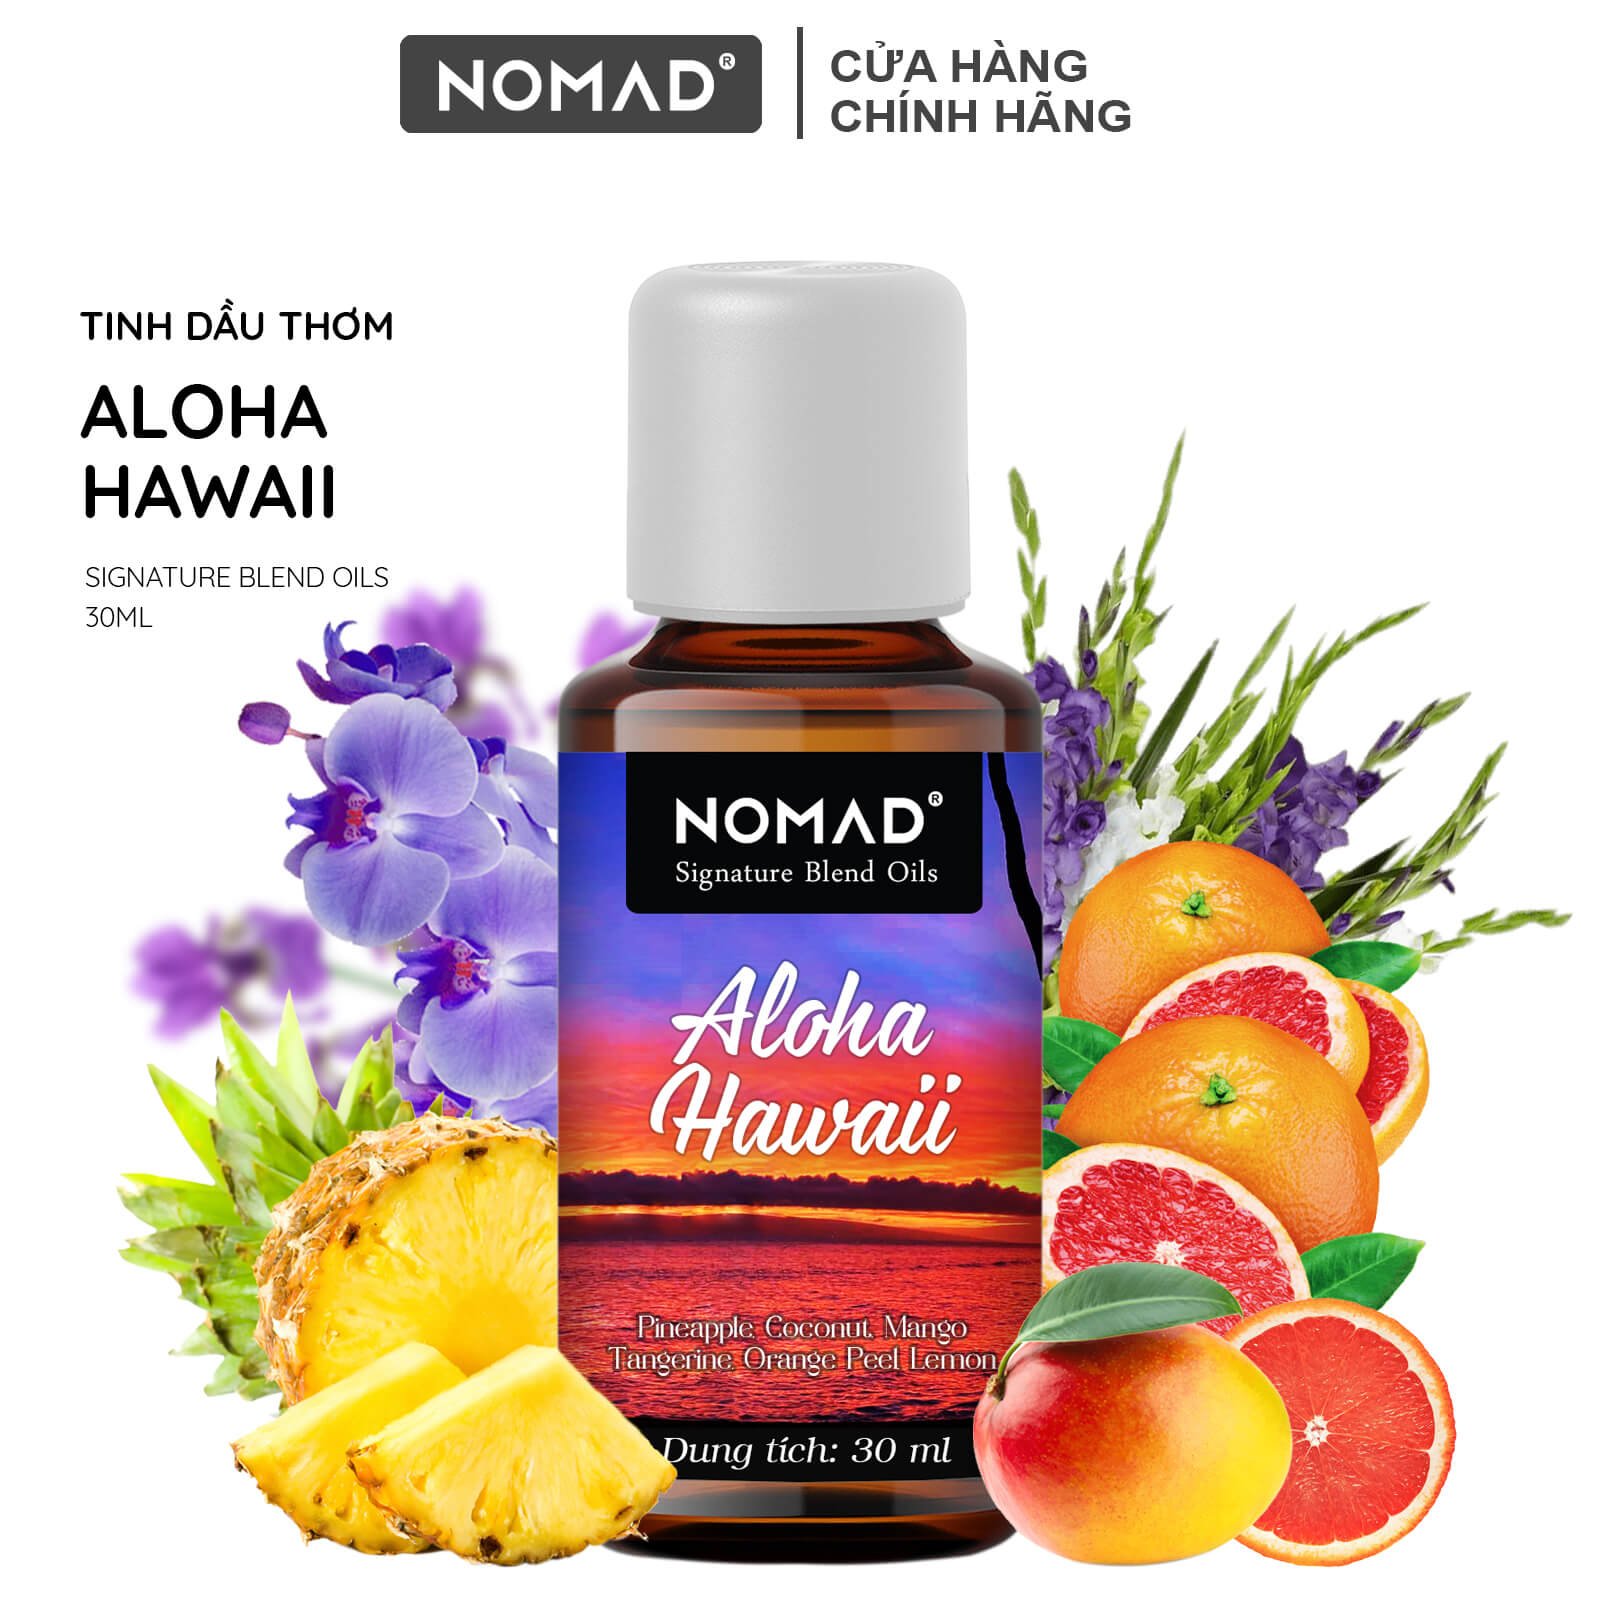 Tinh Dầu Thơm Nomad Signature Blend Oils - Aloha Hawaii